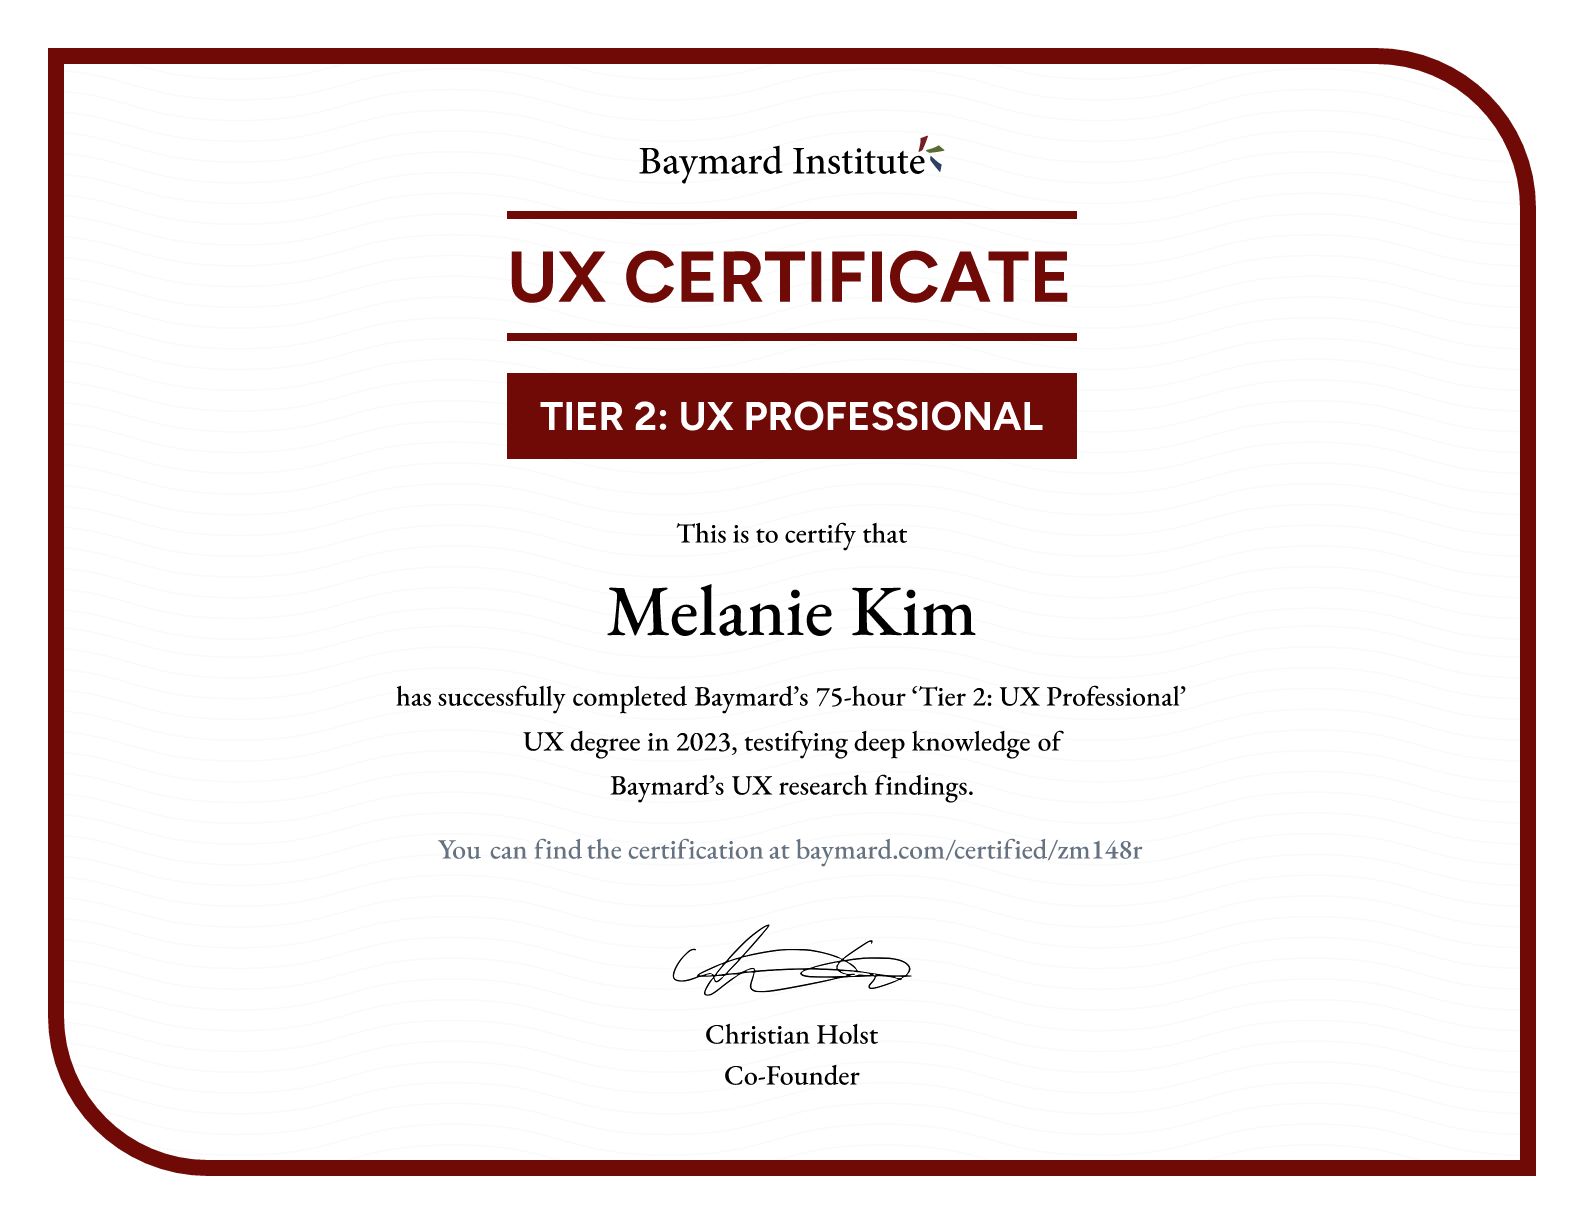 Melanie Kim’s certificate